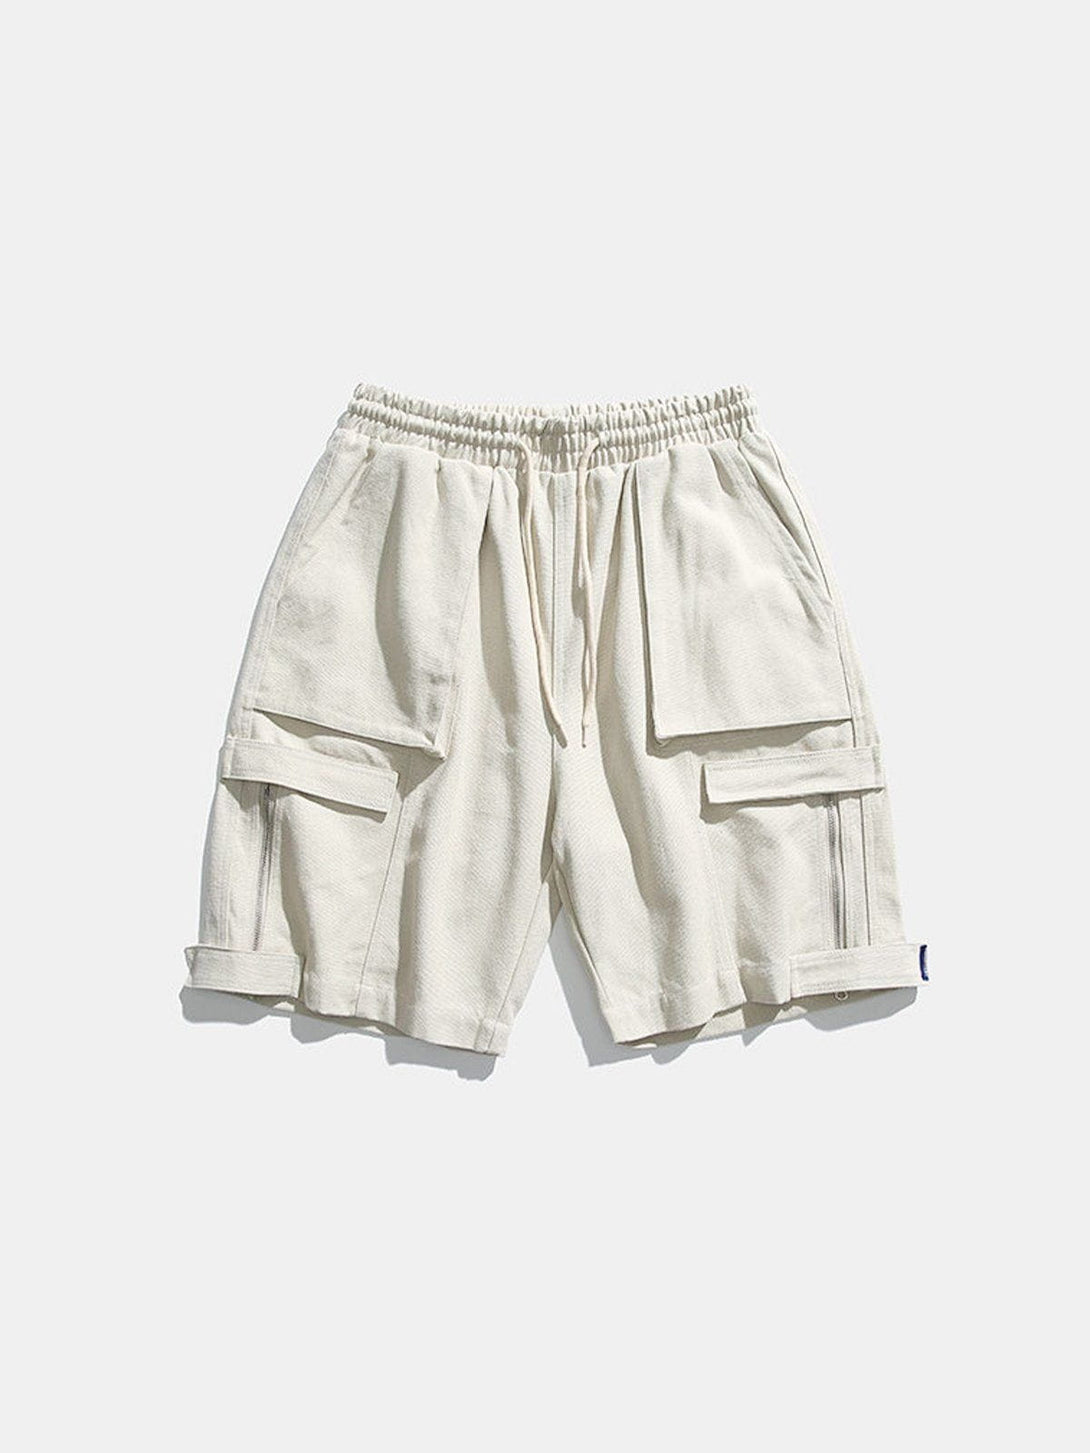 Levefly - Multi-pocket Solid Color Shorts - Streetwear Fashion - levefly.com